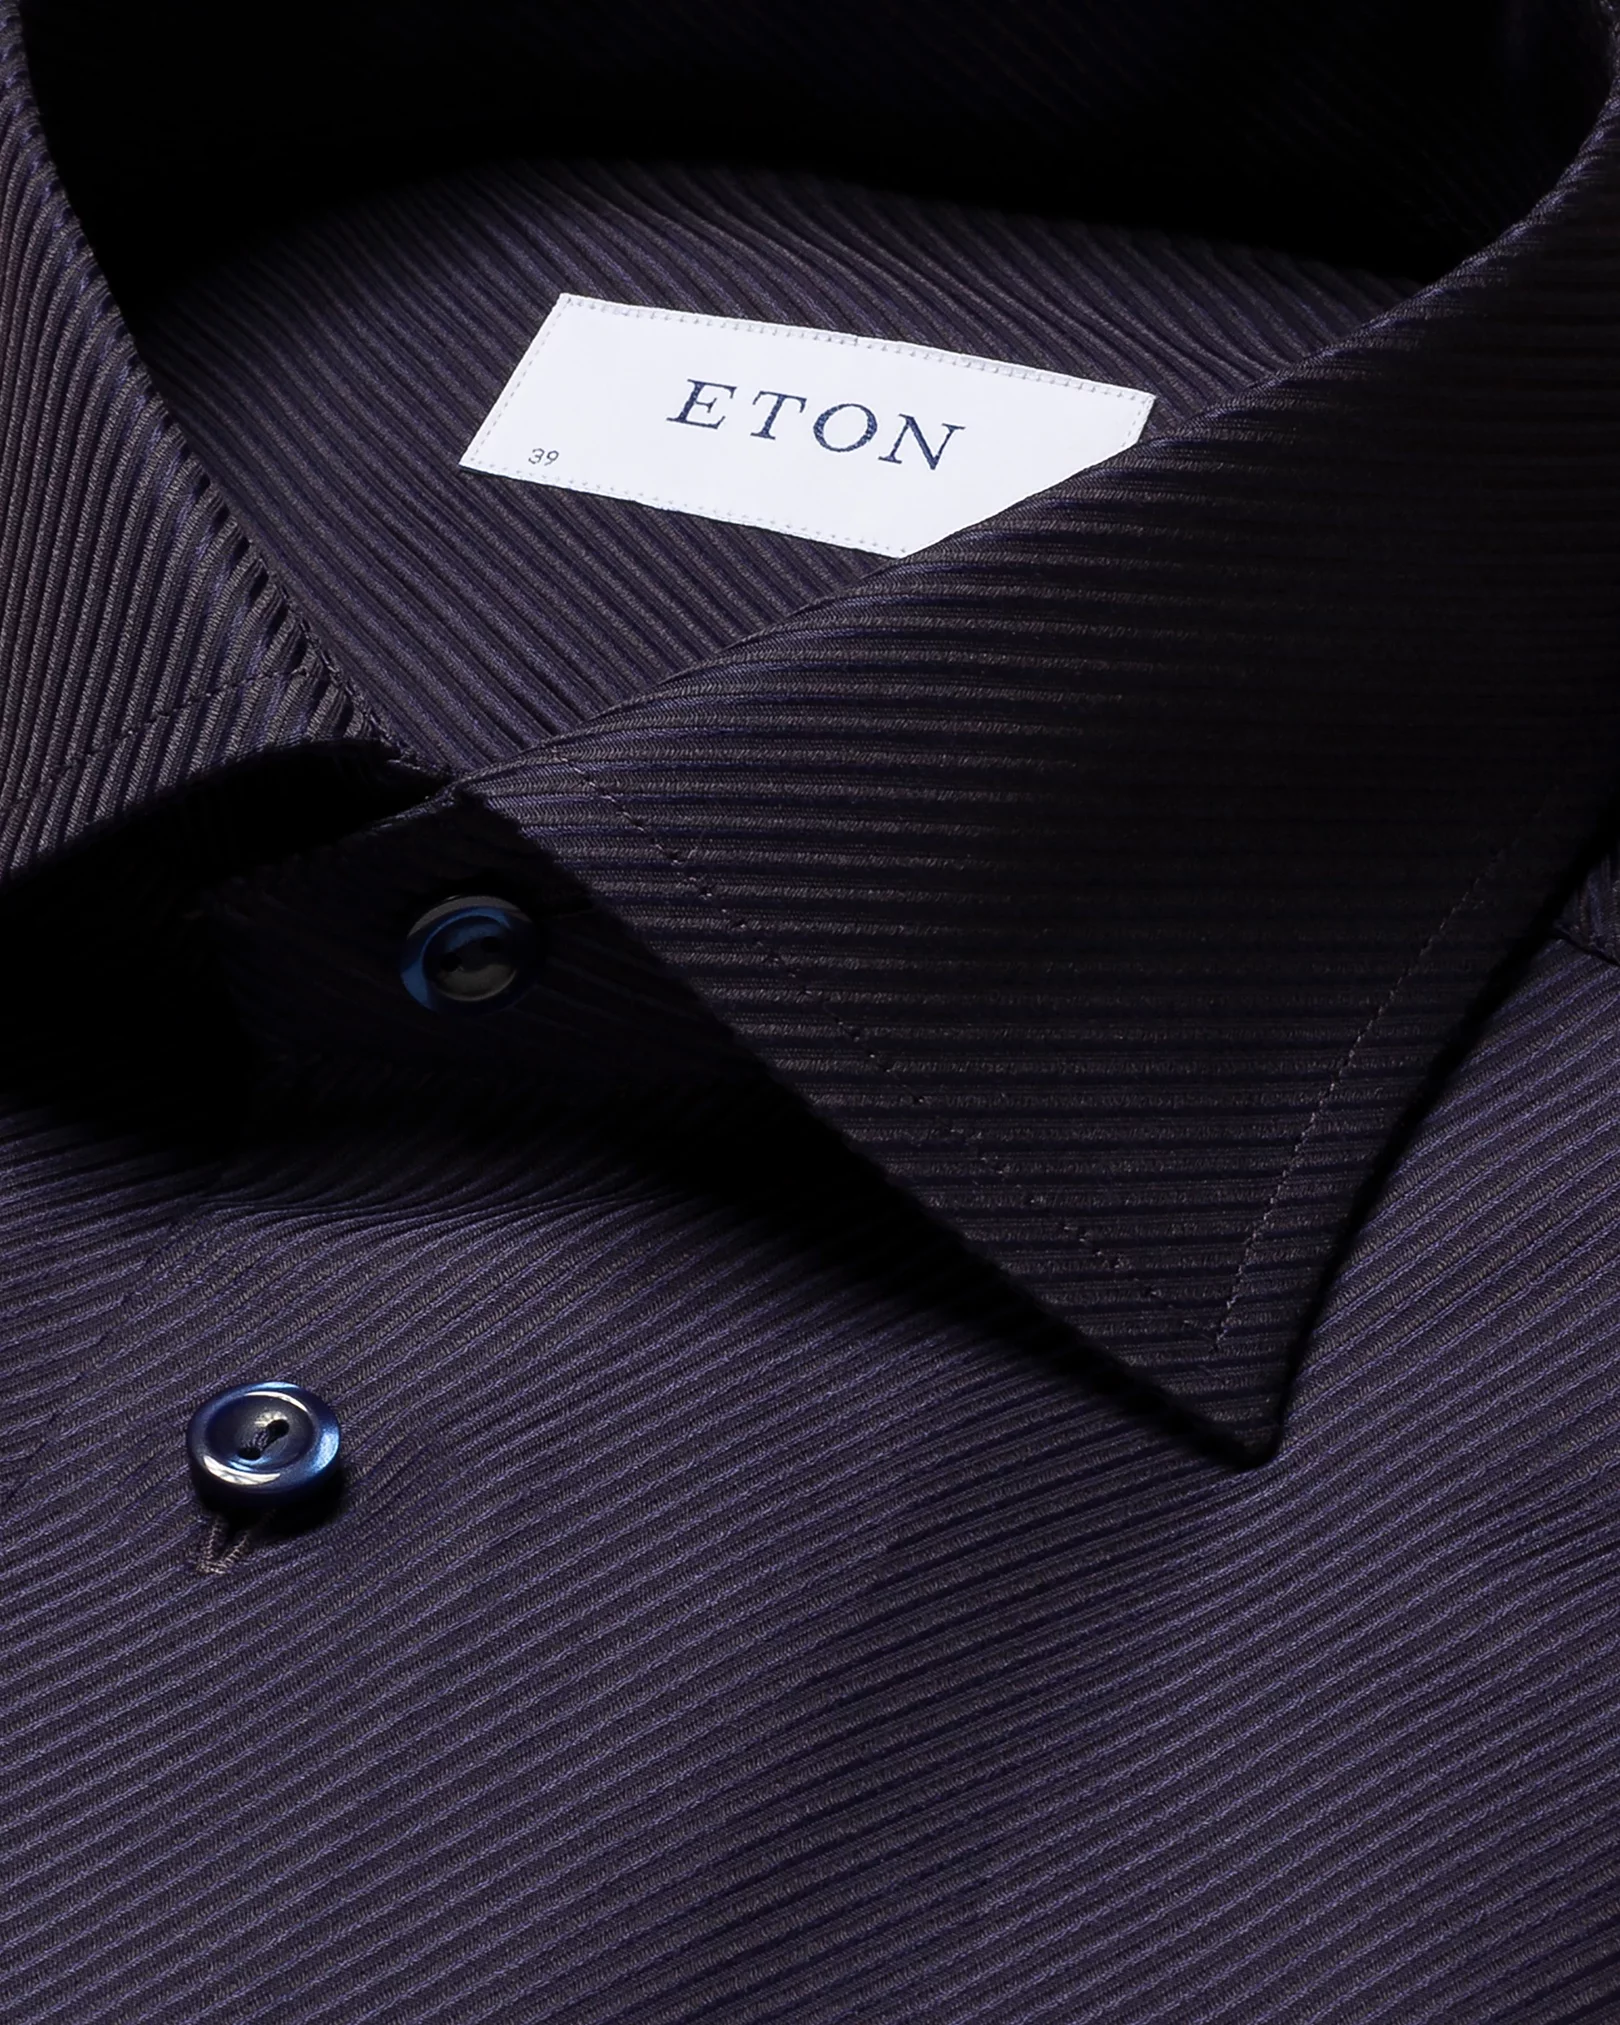 Eton - navy blue textured twill